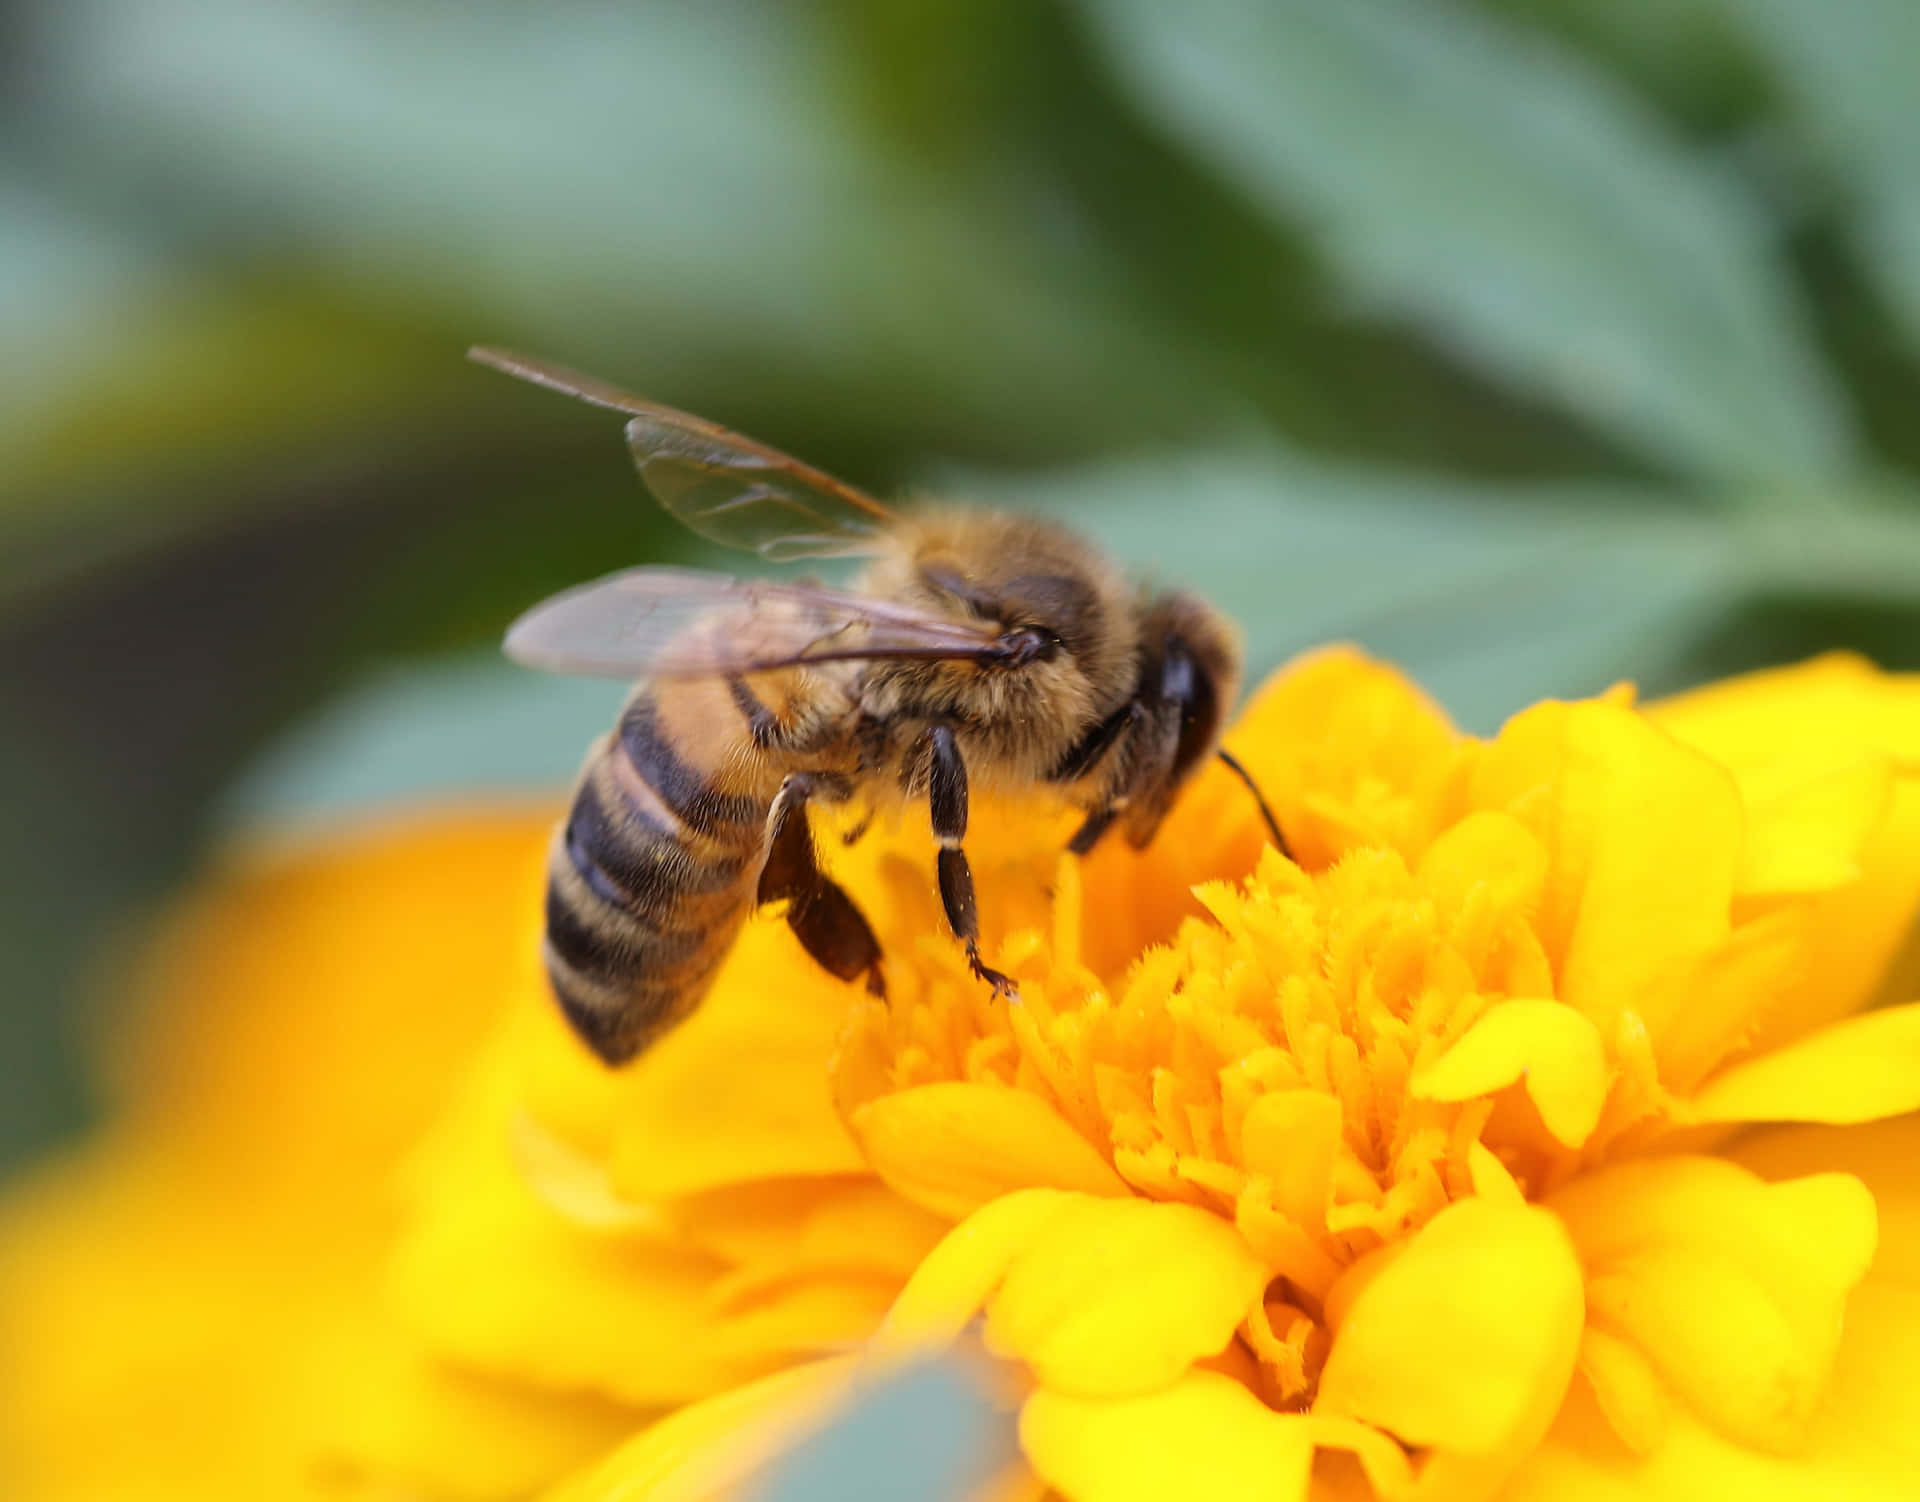 "The Amazing World of Honey Bees"